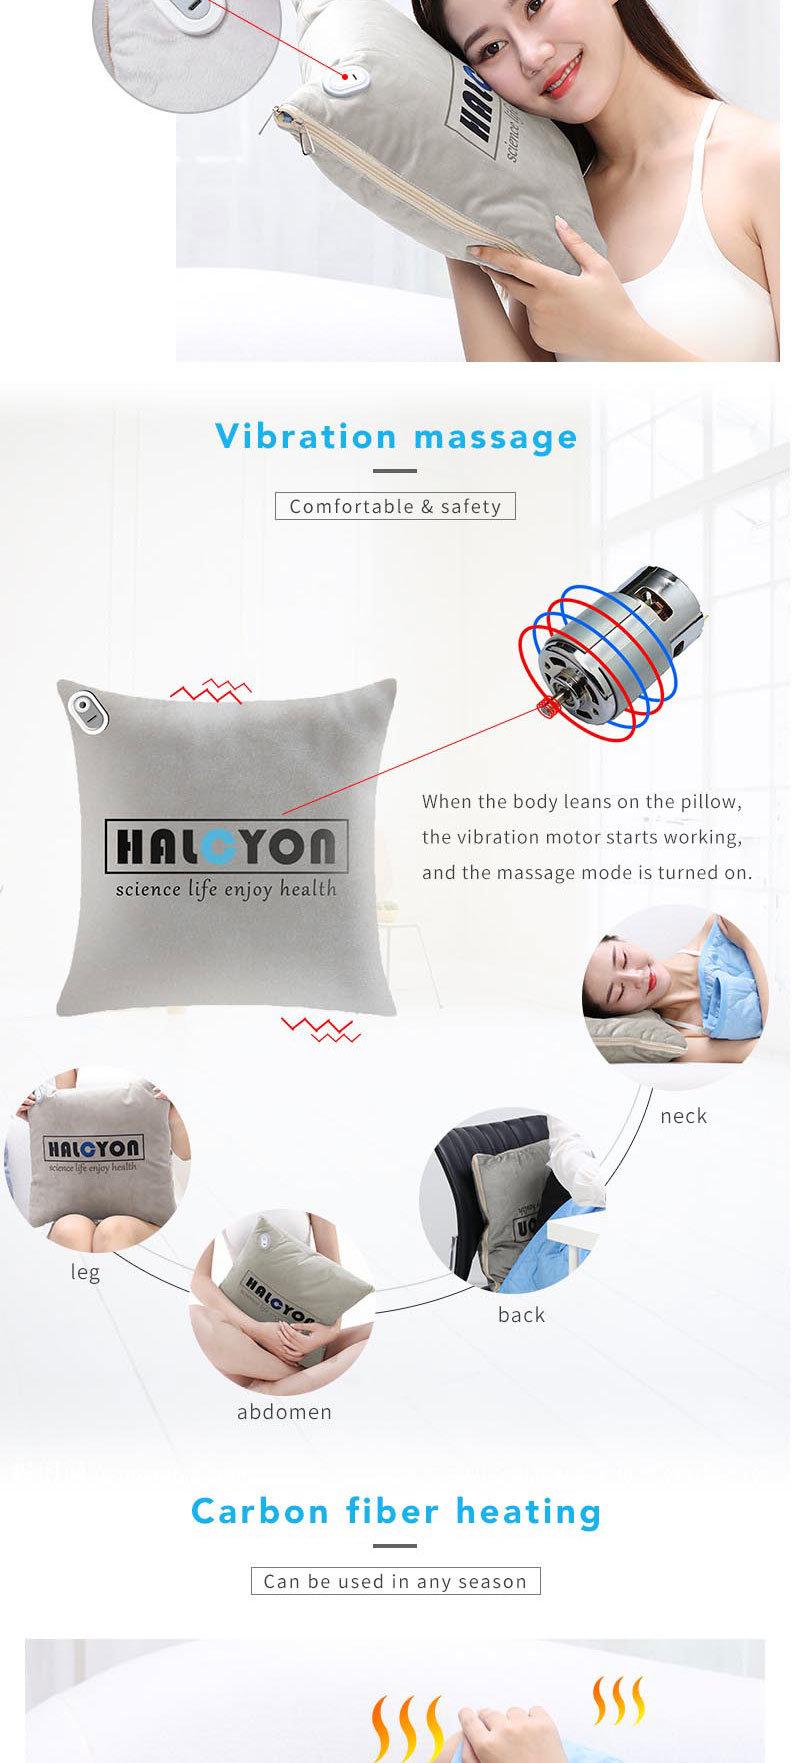 Hezheng Fleece 2 in 1 Pillow Travel Heating Blanket Travel Heating Blanket Soft Foldable Custom Airplane Blanket Massage